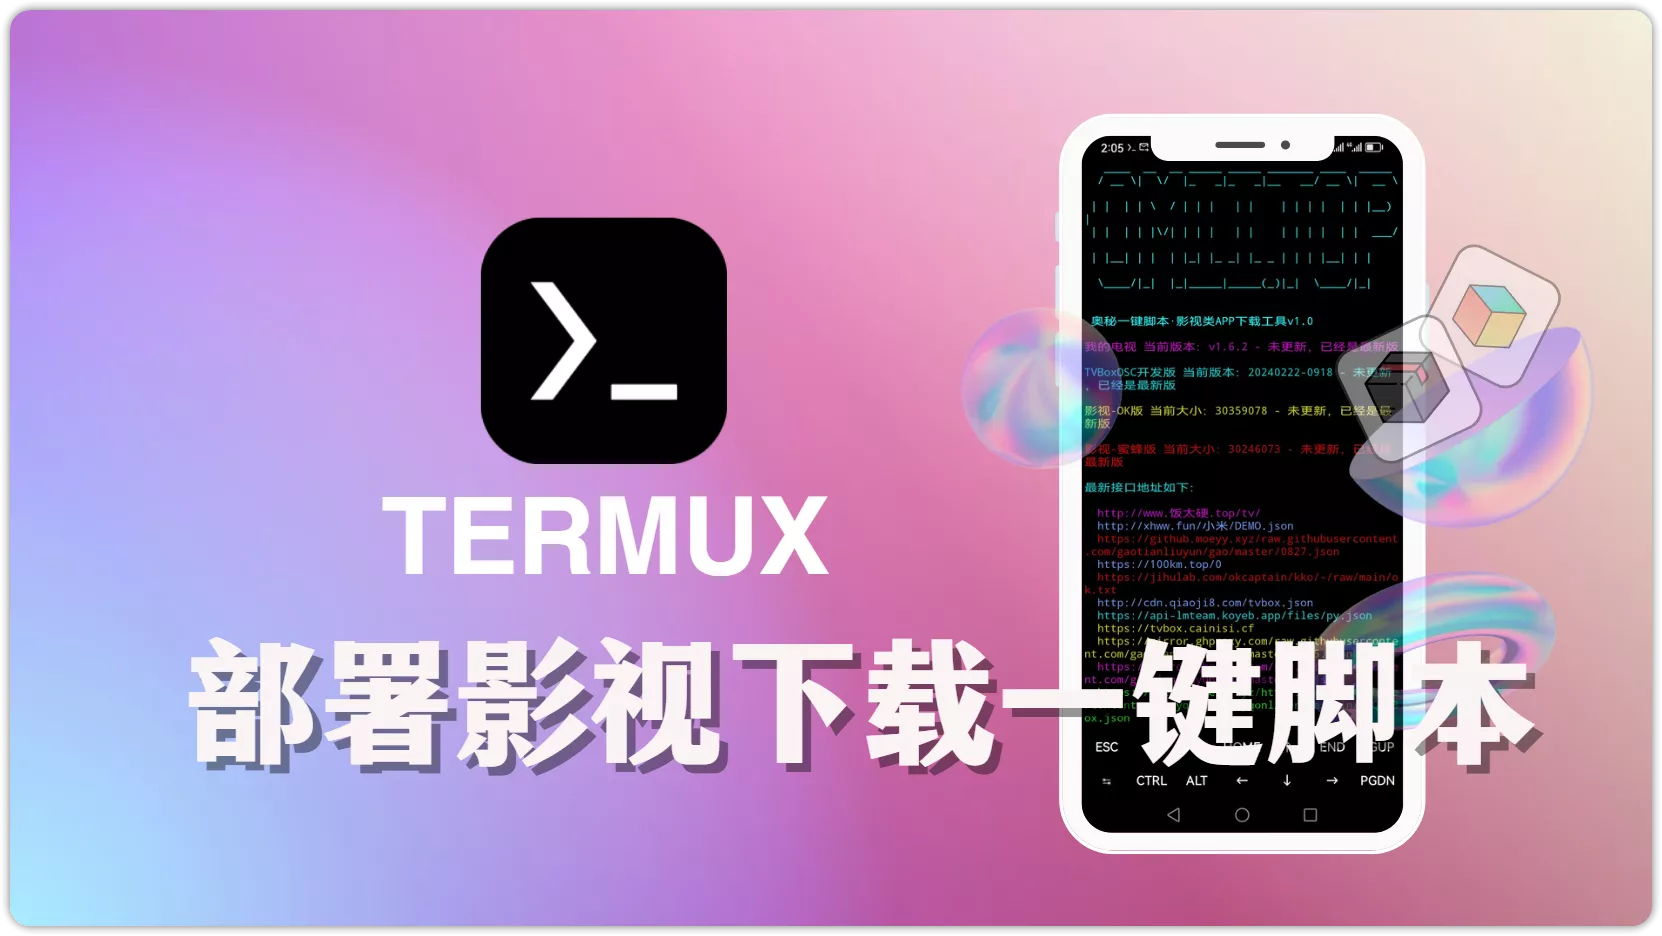 Termux 骇客玩机新境界，观影类APK自动下载教程-OMii 